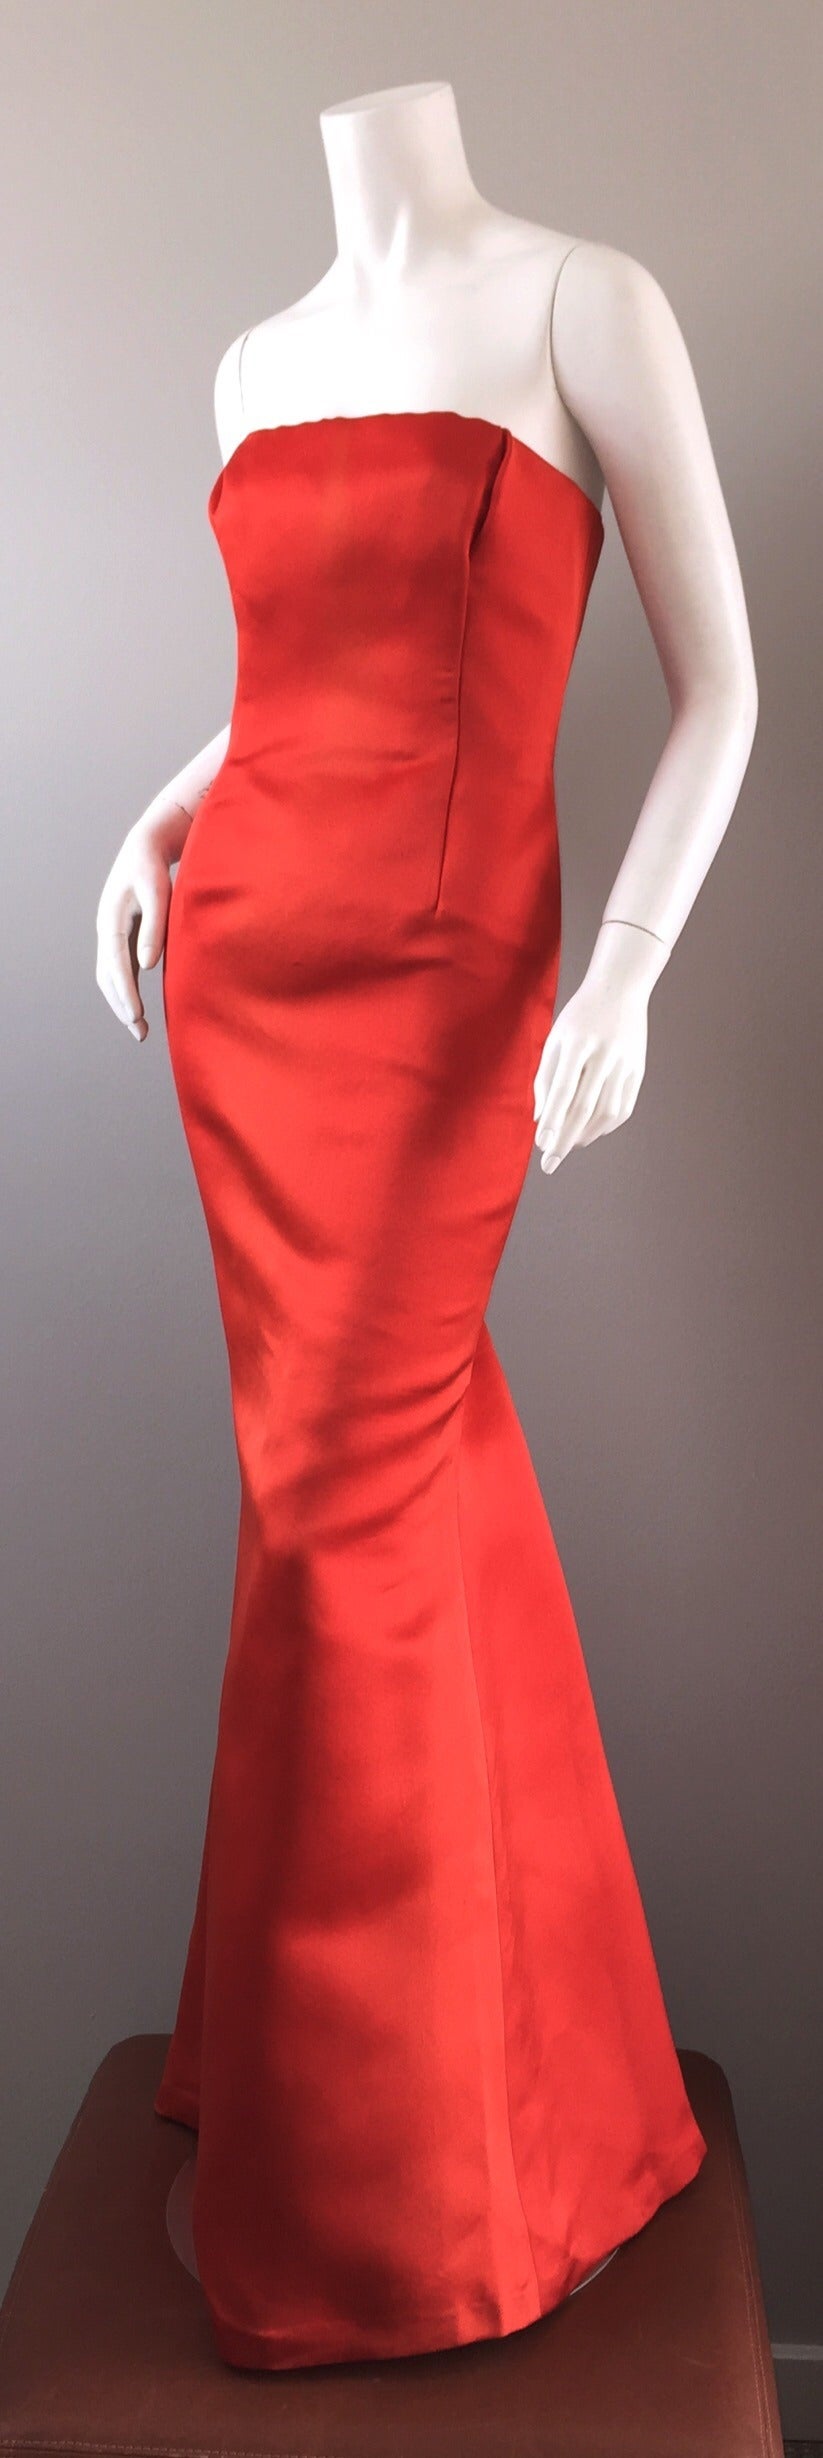 red strapless dresses